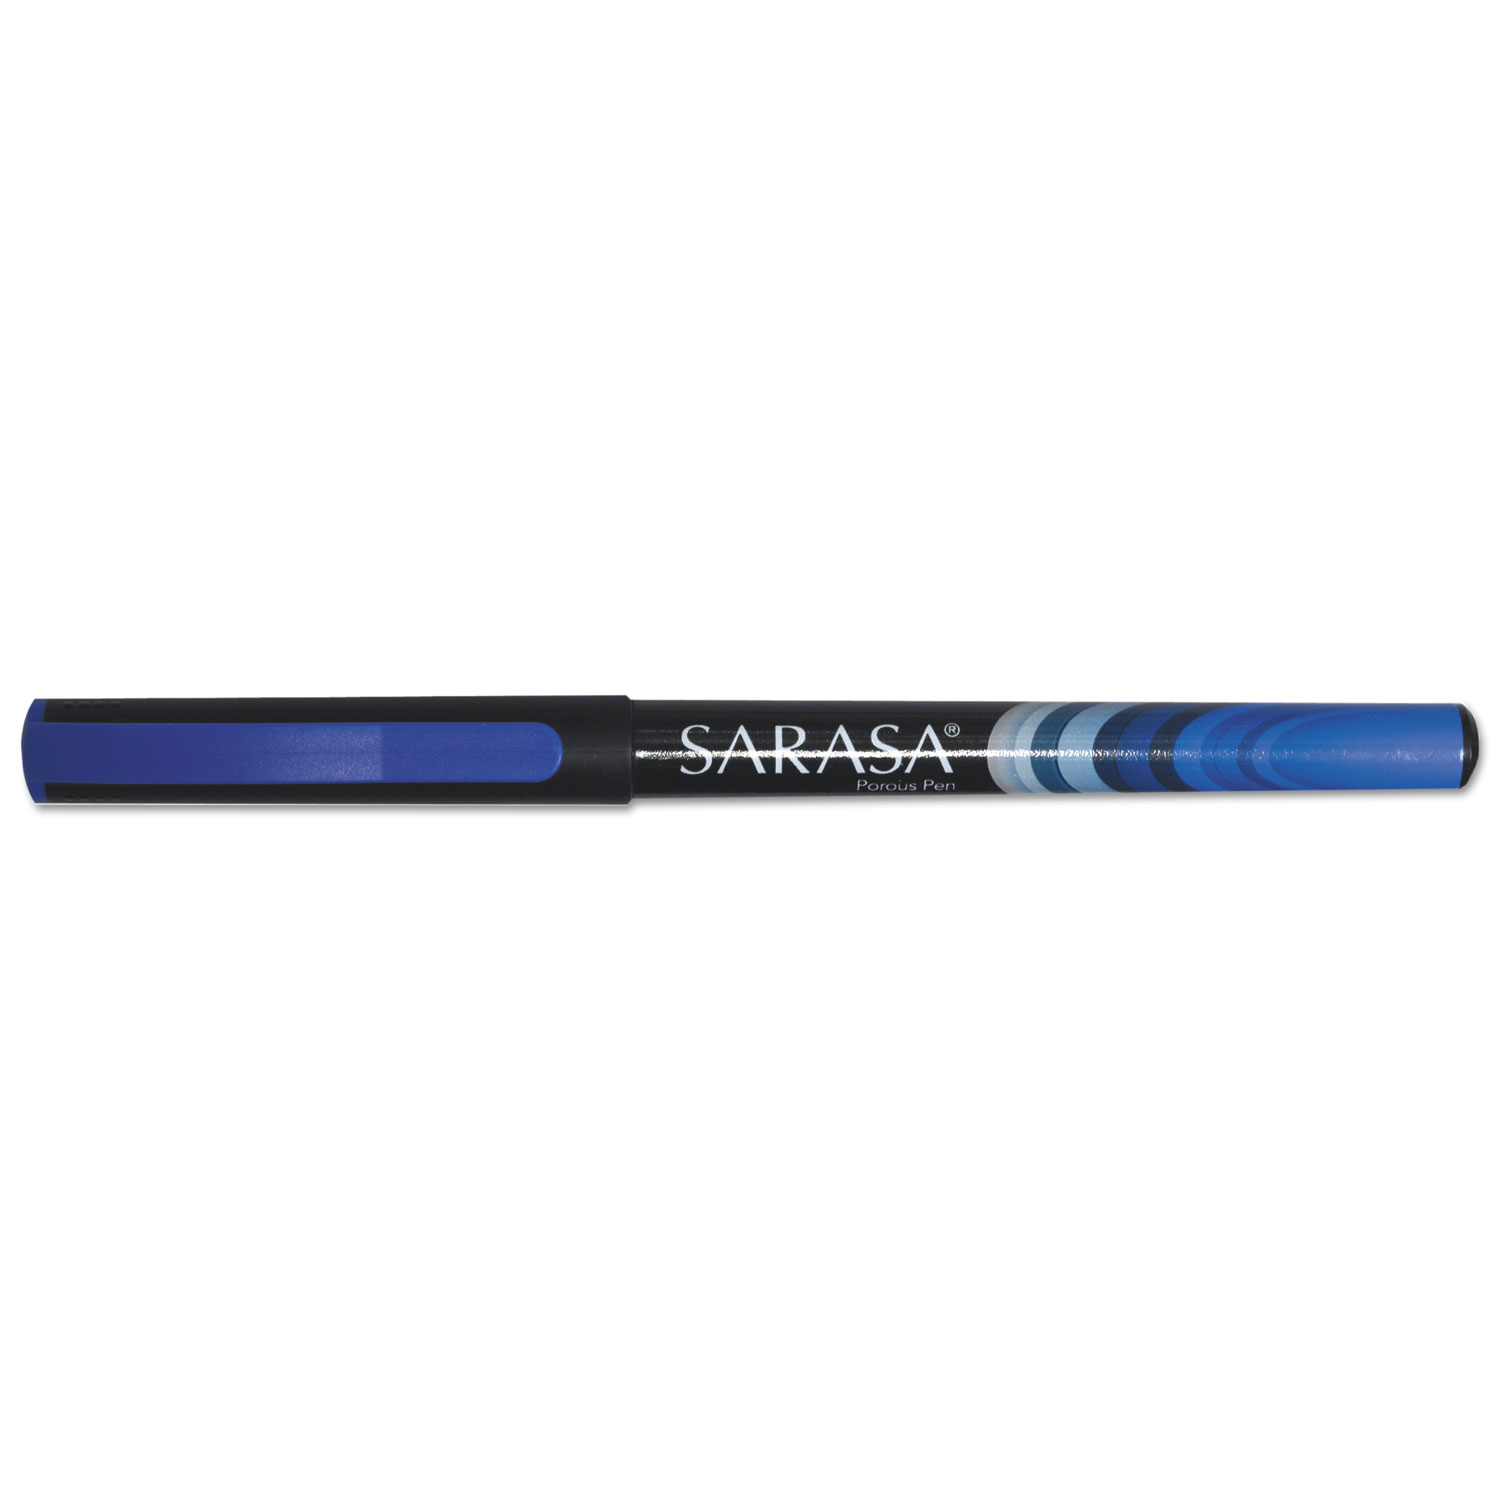 Sarasa Porous Pen, 0.8 mm, Fine, Blue, Dozen